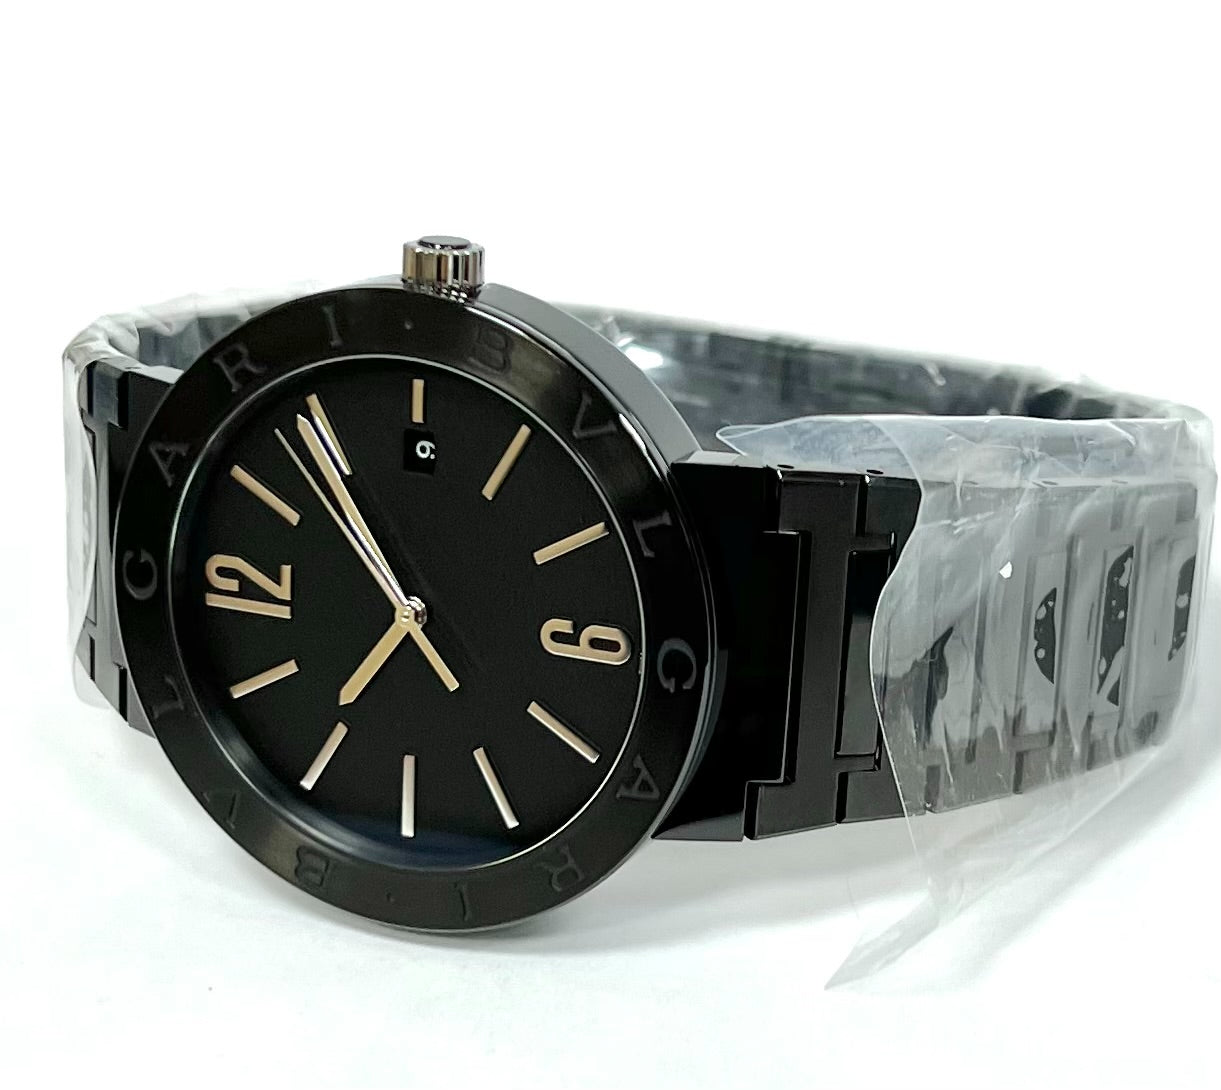 Bvlgari Bvlgari Man Collection: Watches